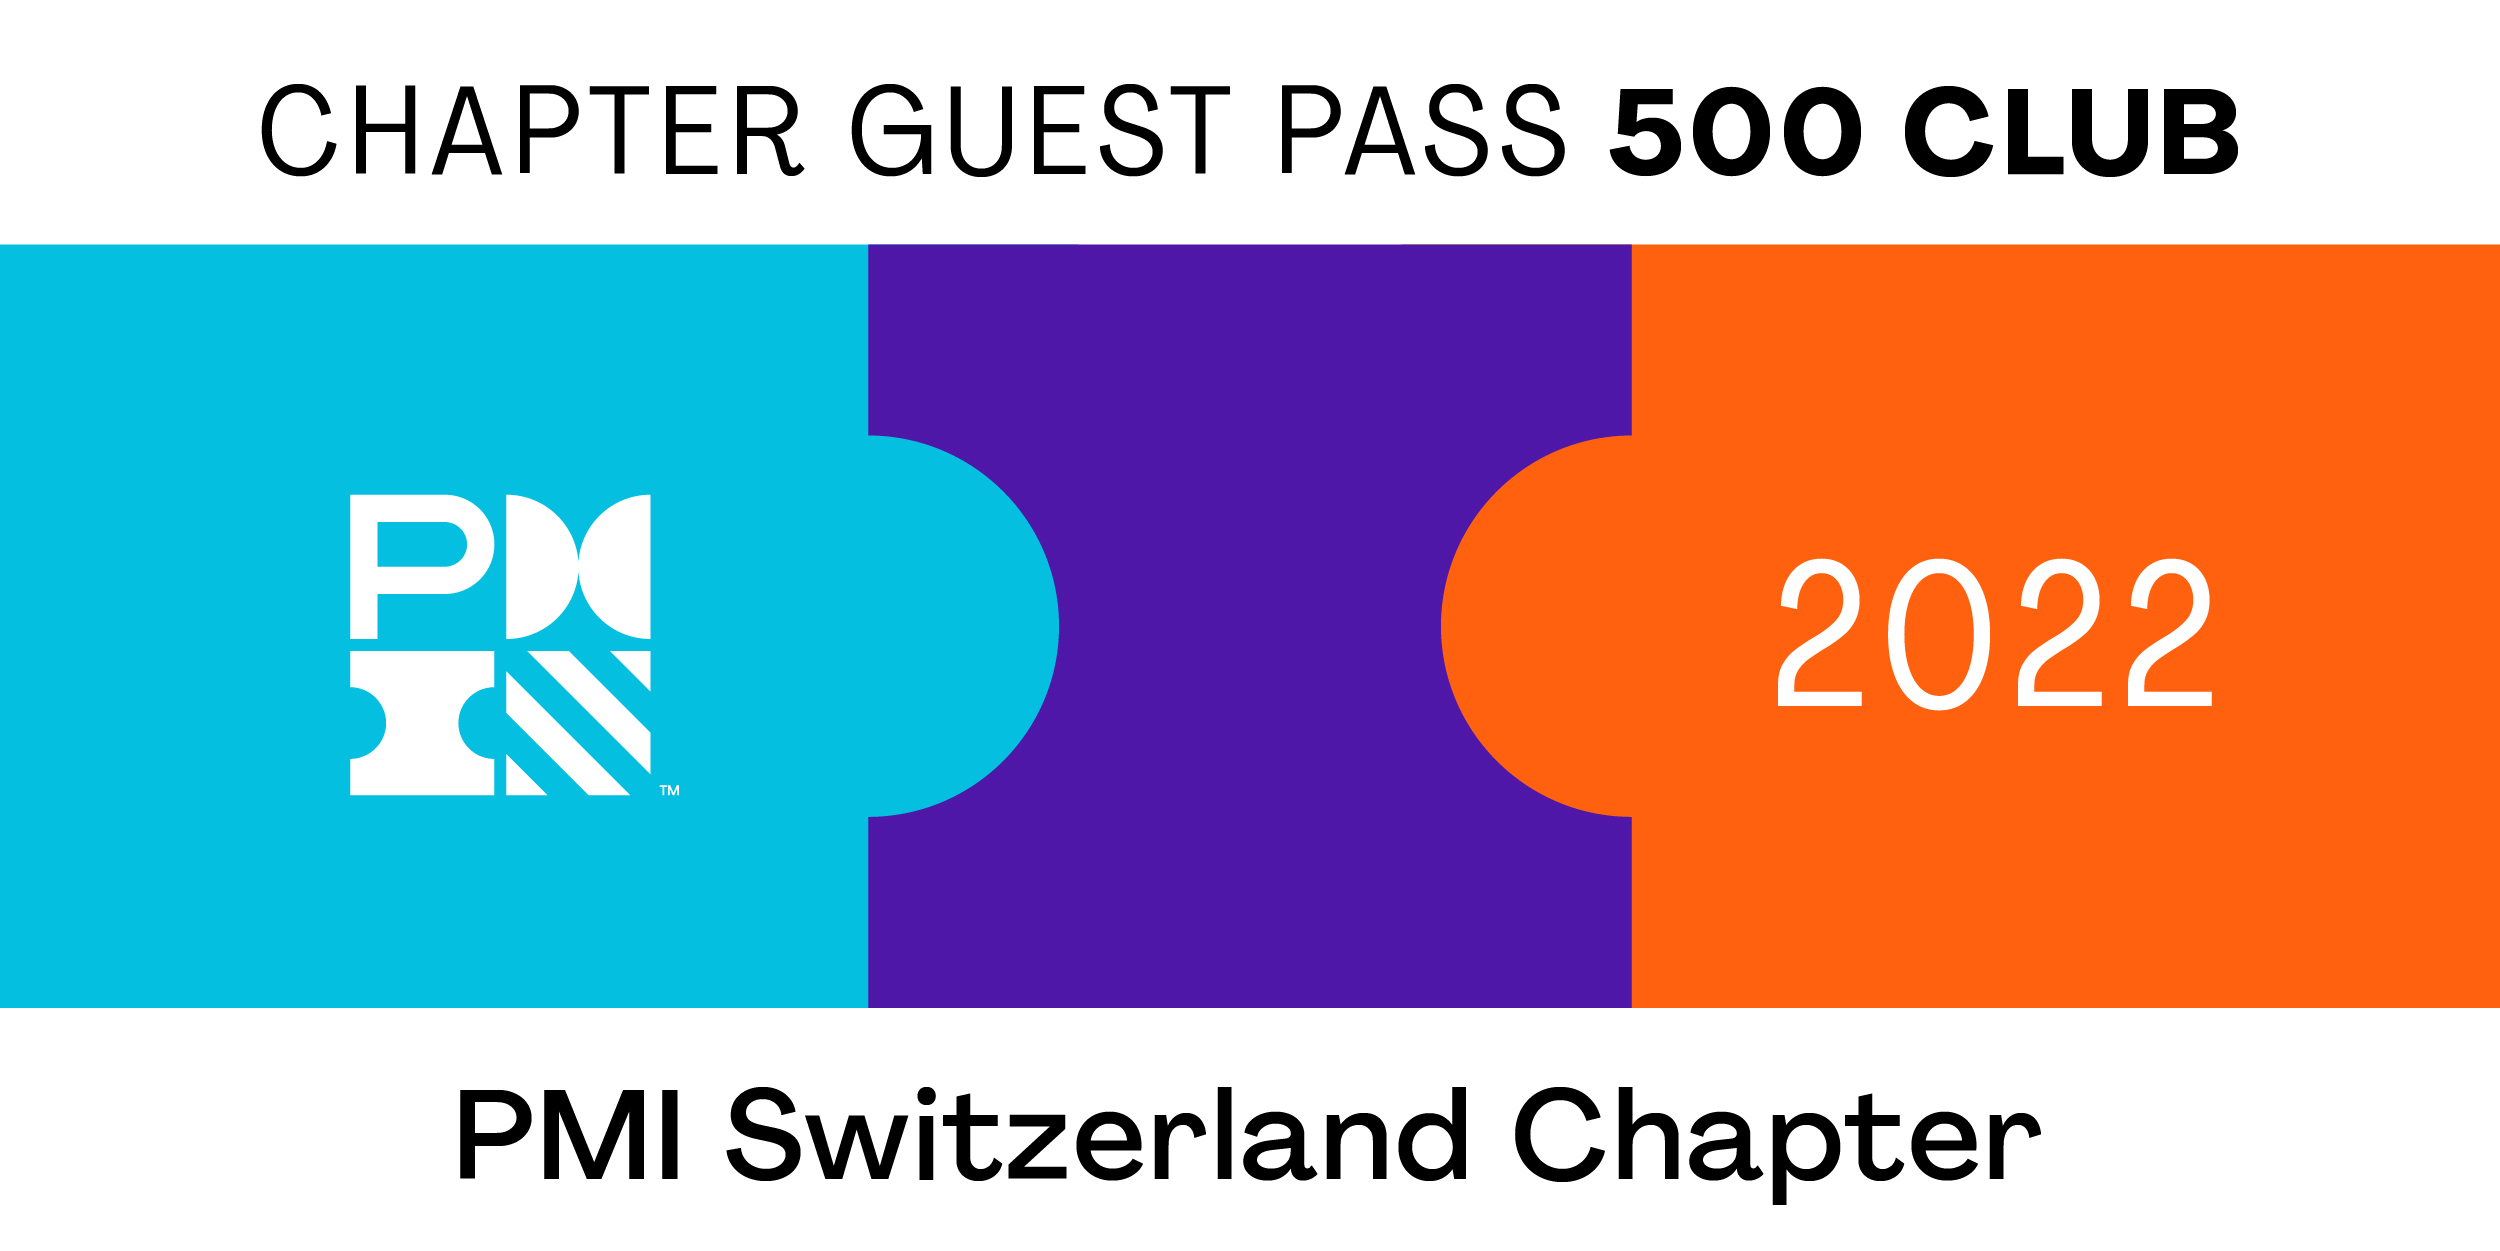 Switzerland Chapter 2022 Chapter Guest Pass